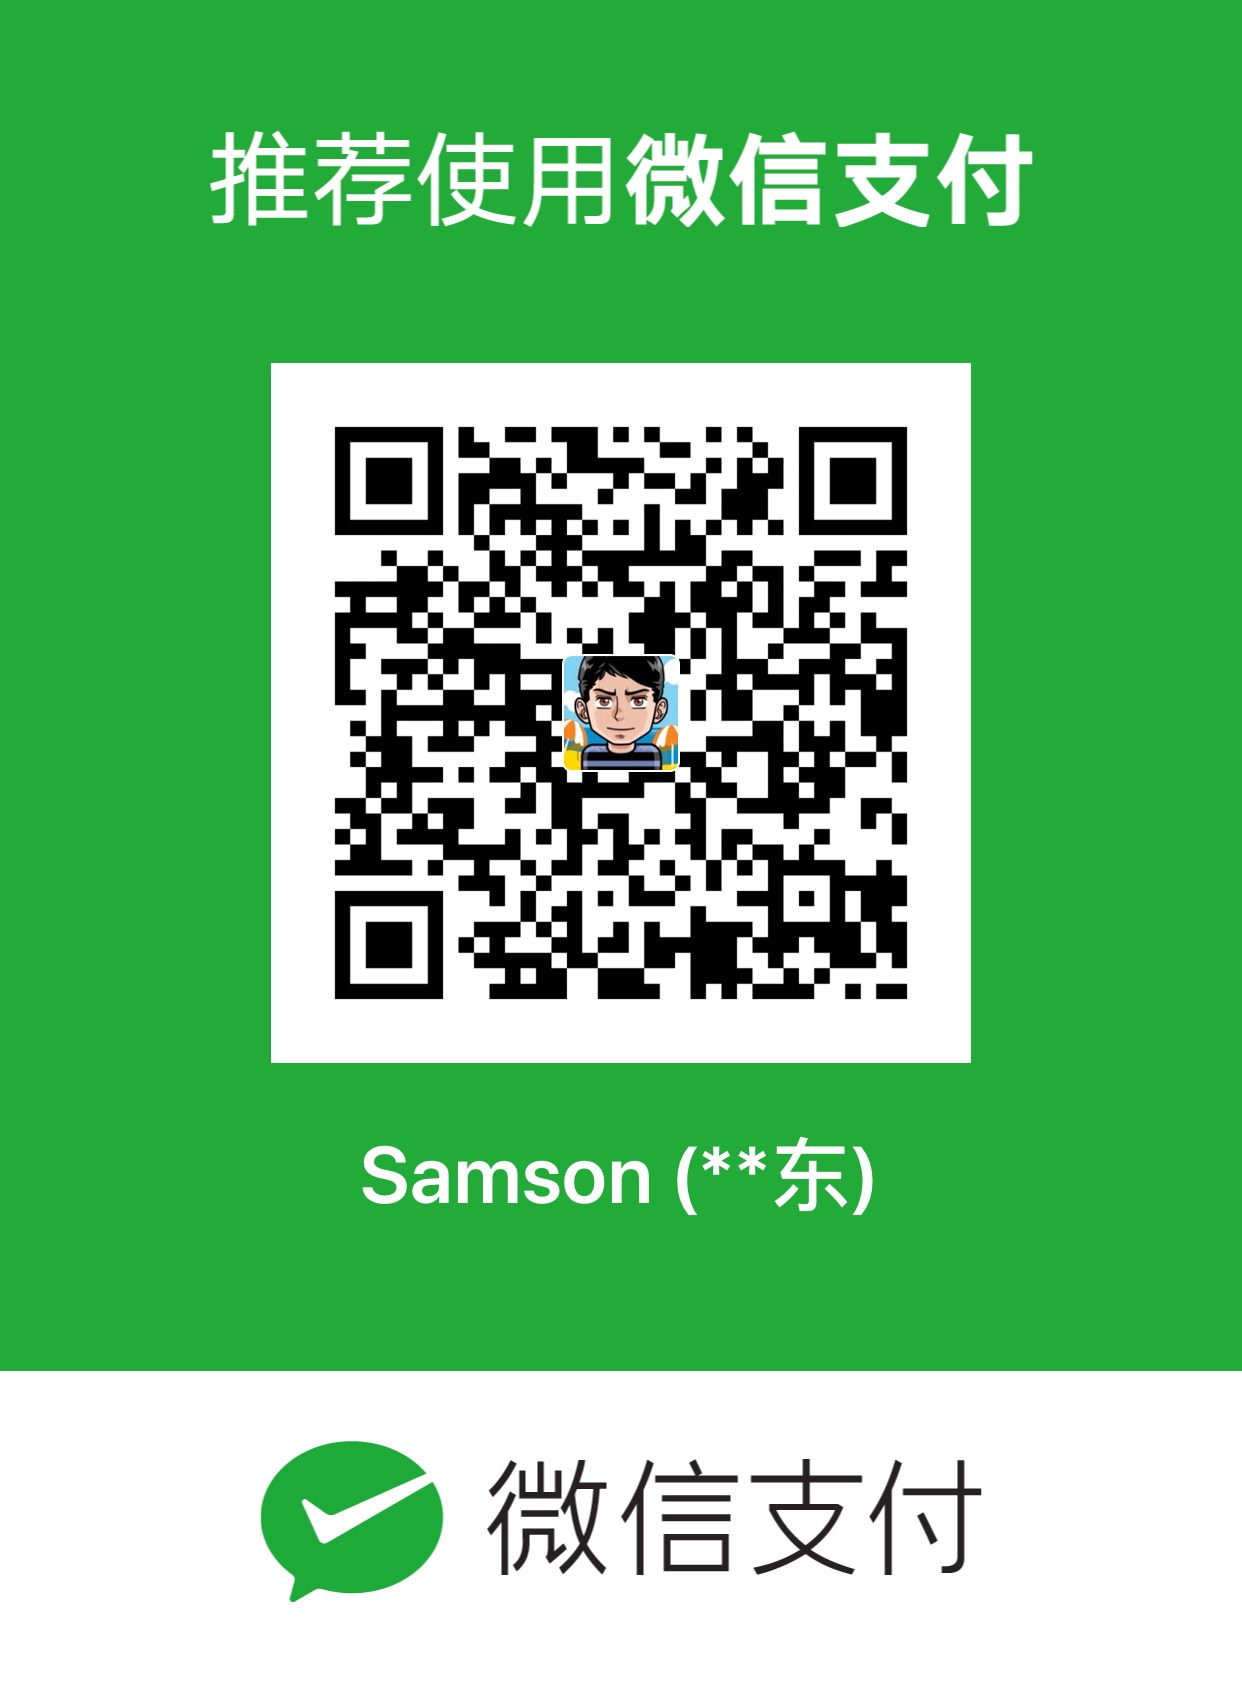 Samson Wu WeChat Pay